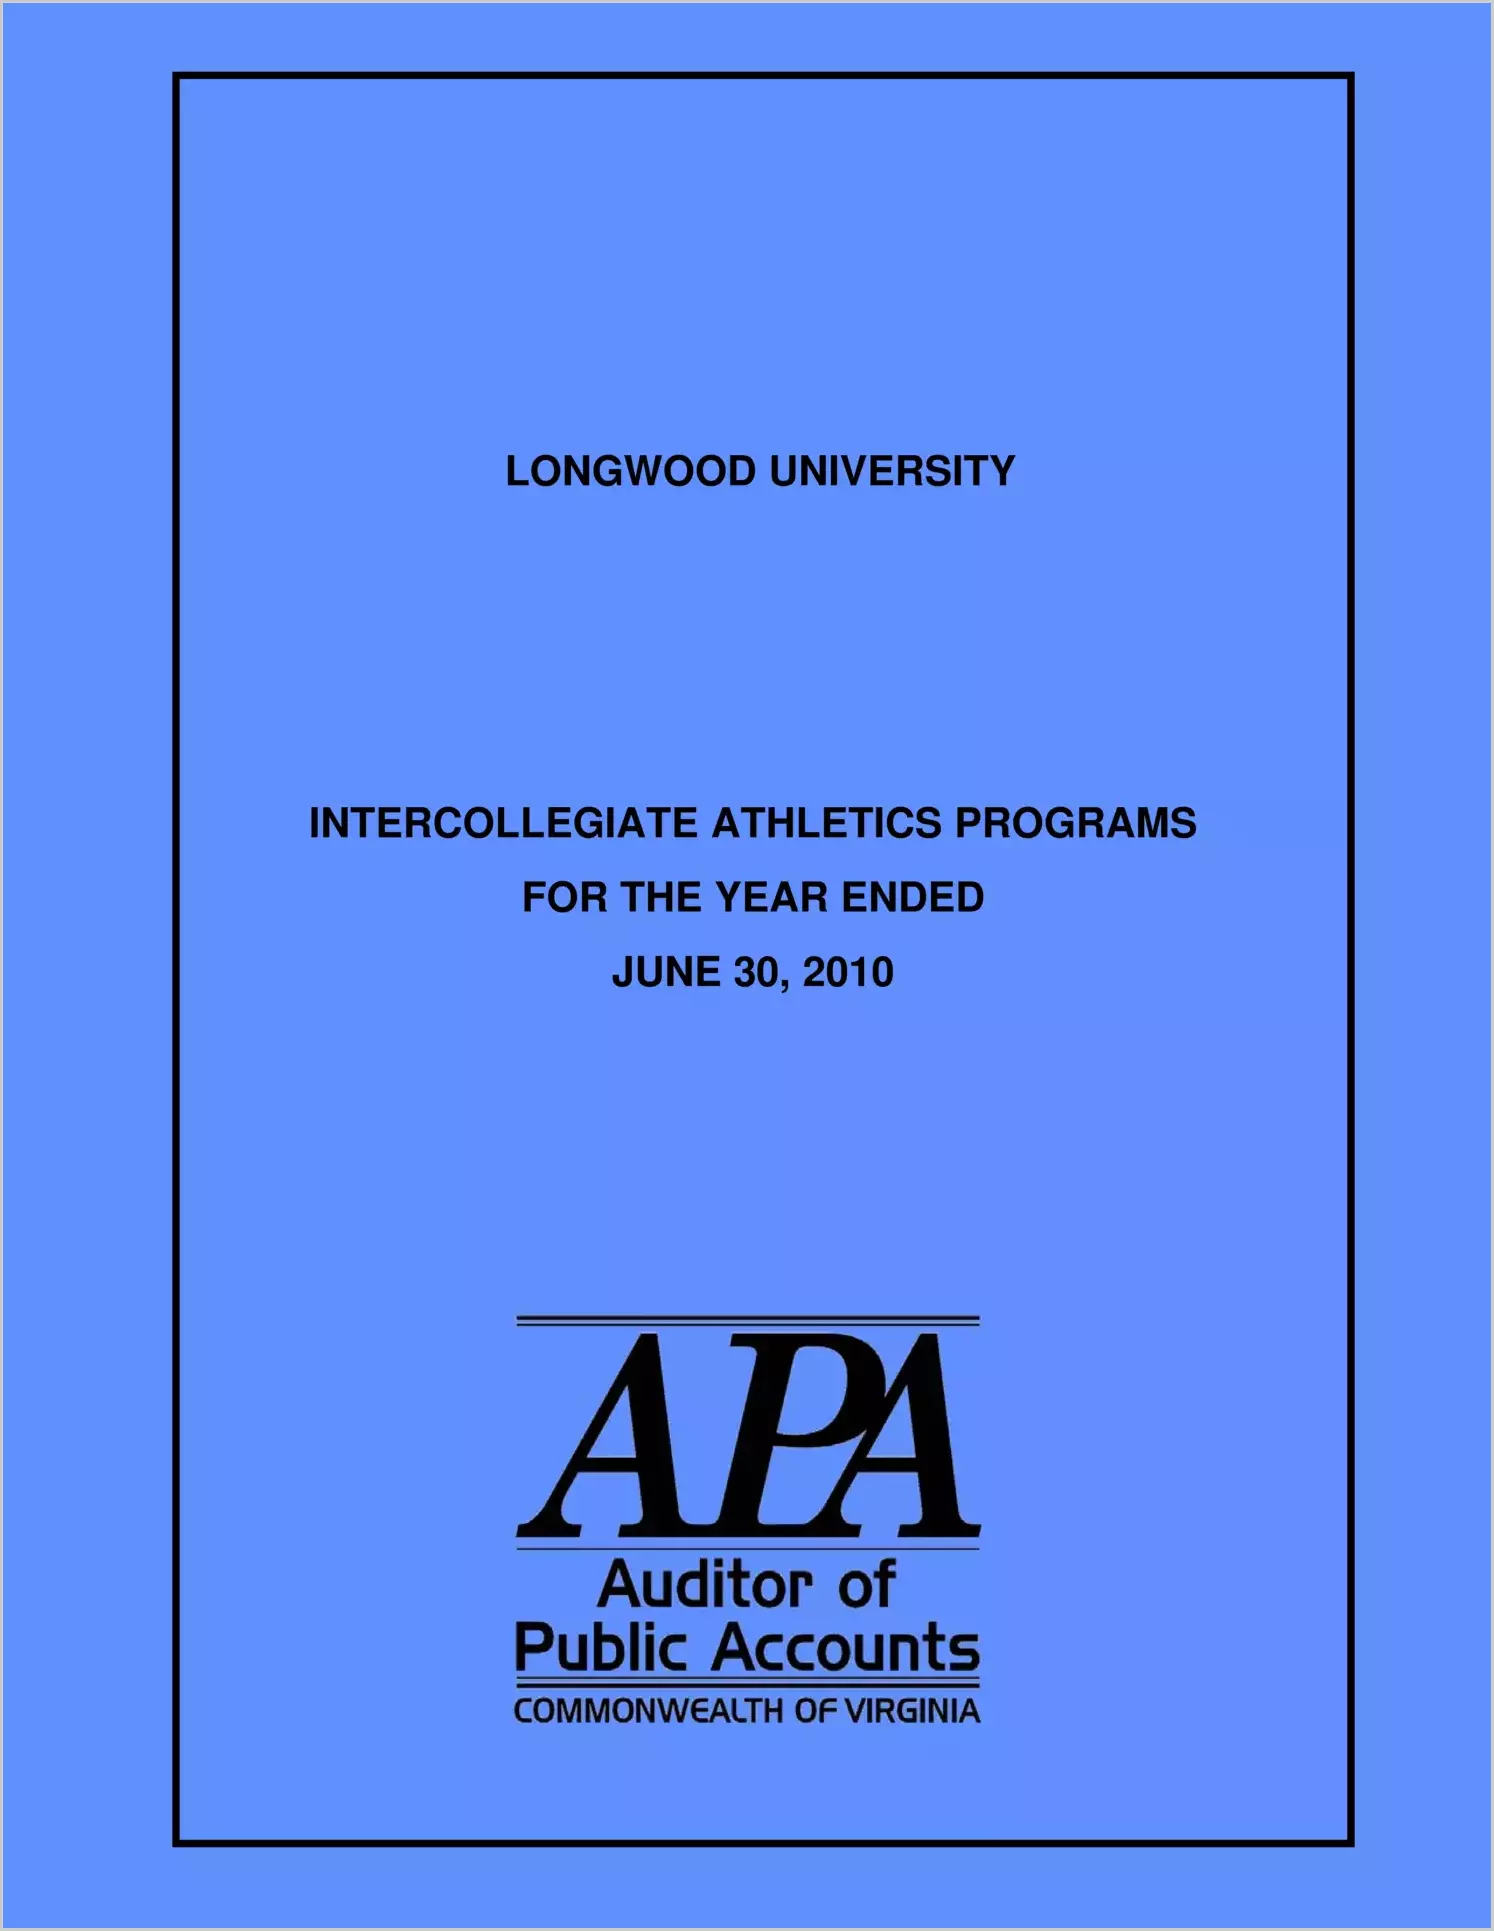 Longwood University Intercollegiate Athletics Programs for the year ended June 30, 2010